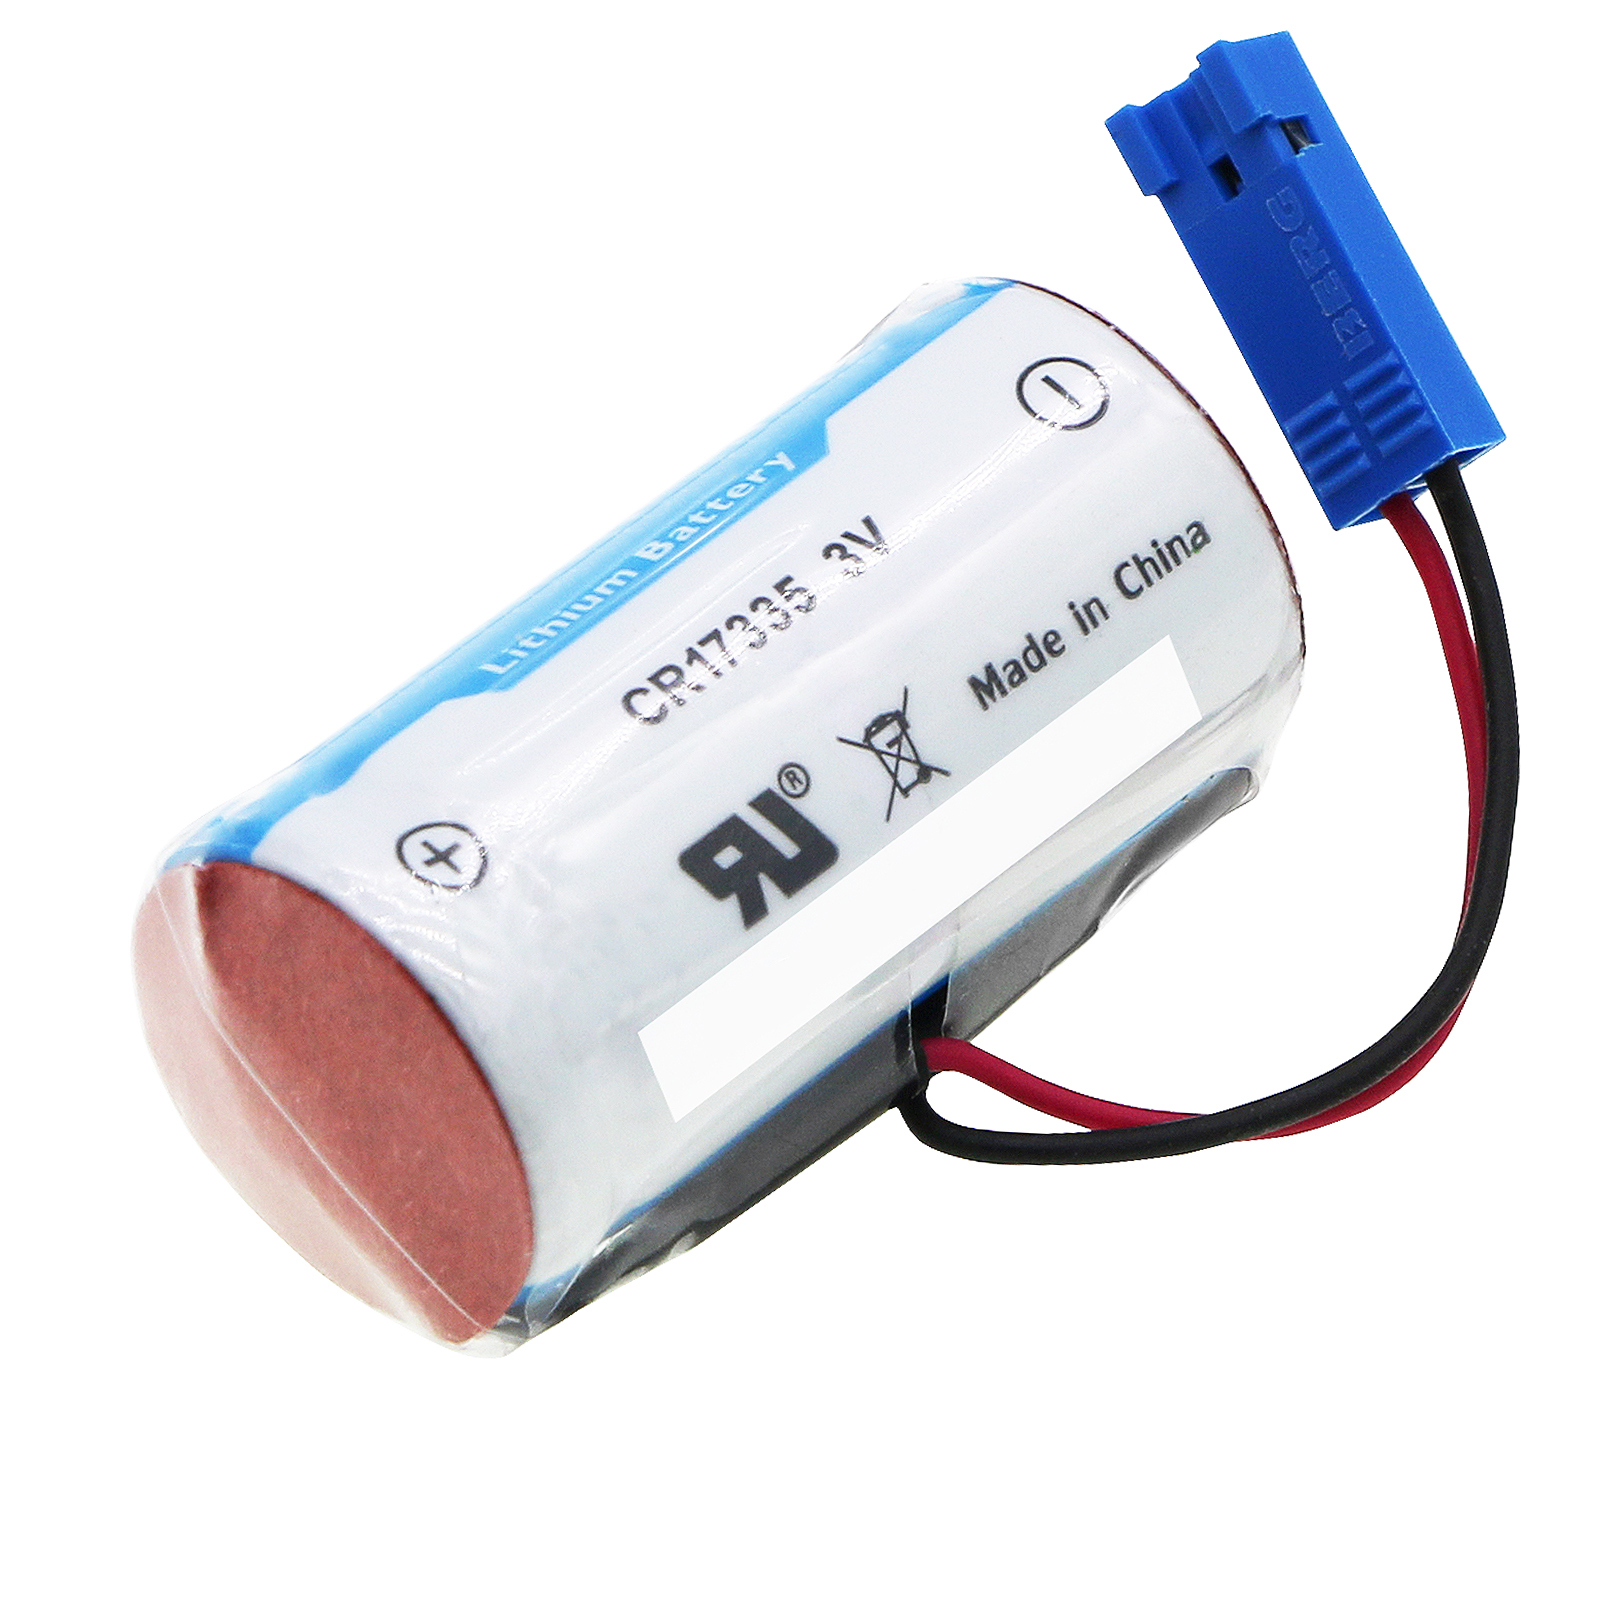 Batteries for HeidelbergPLC